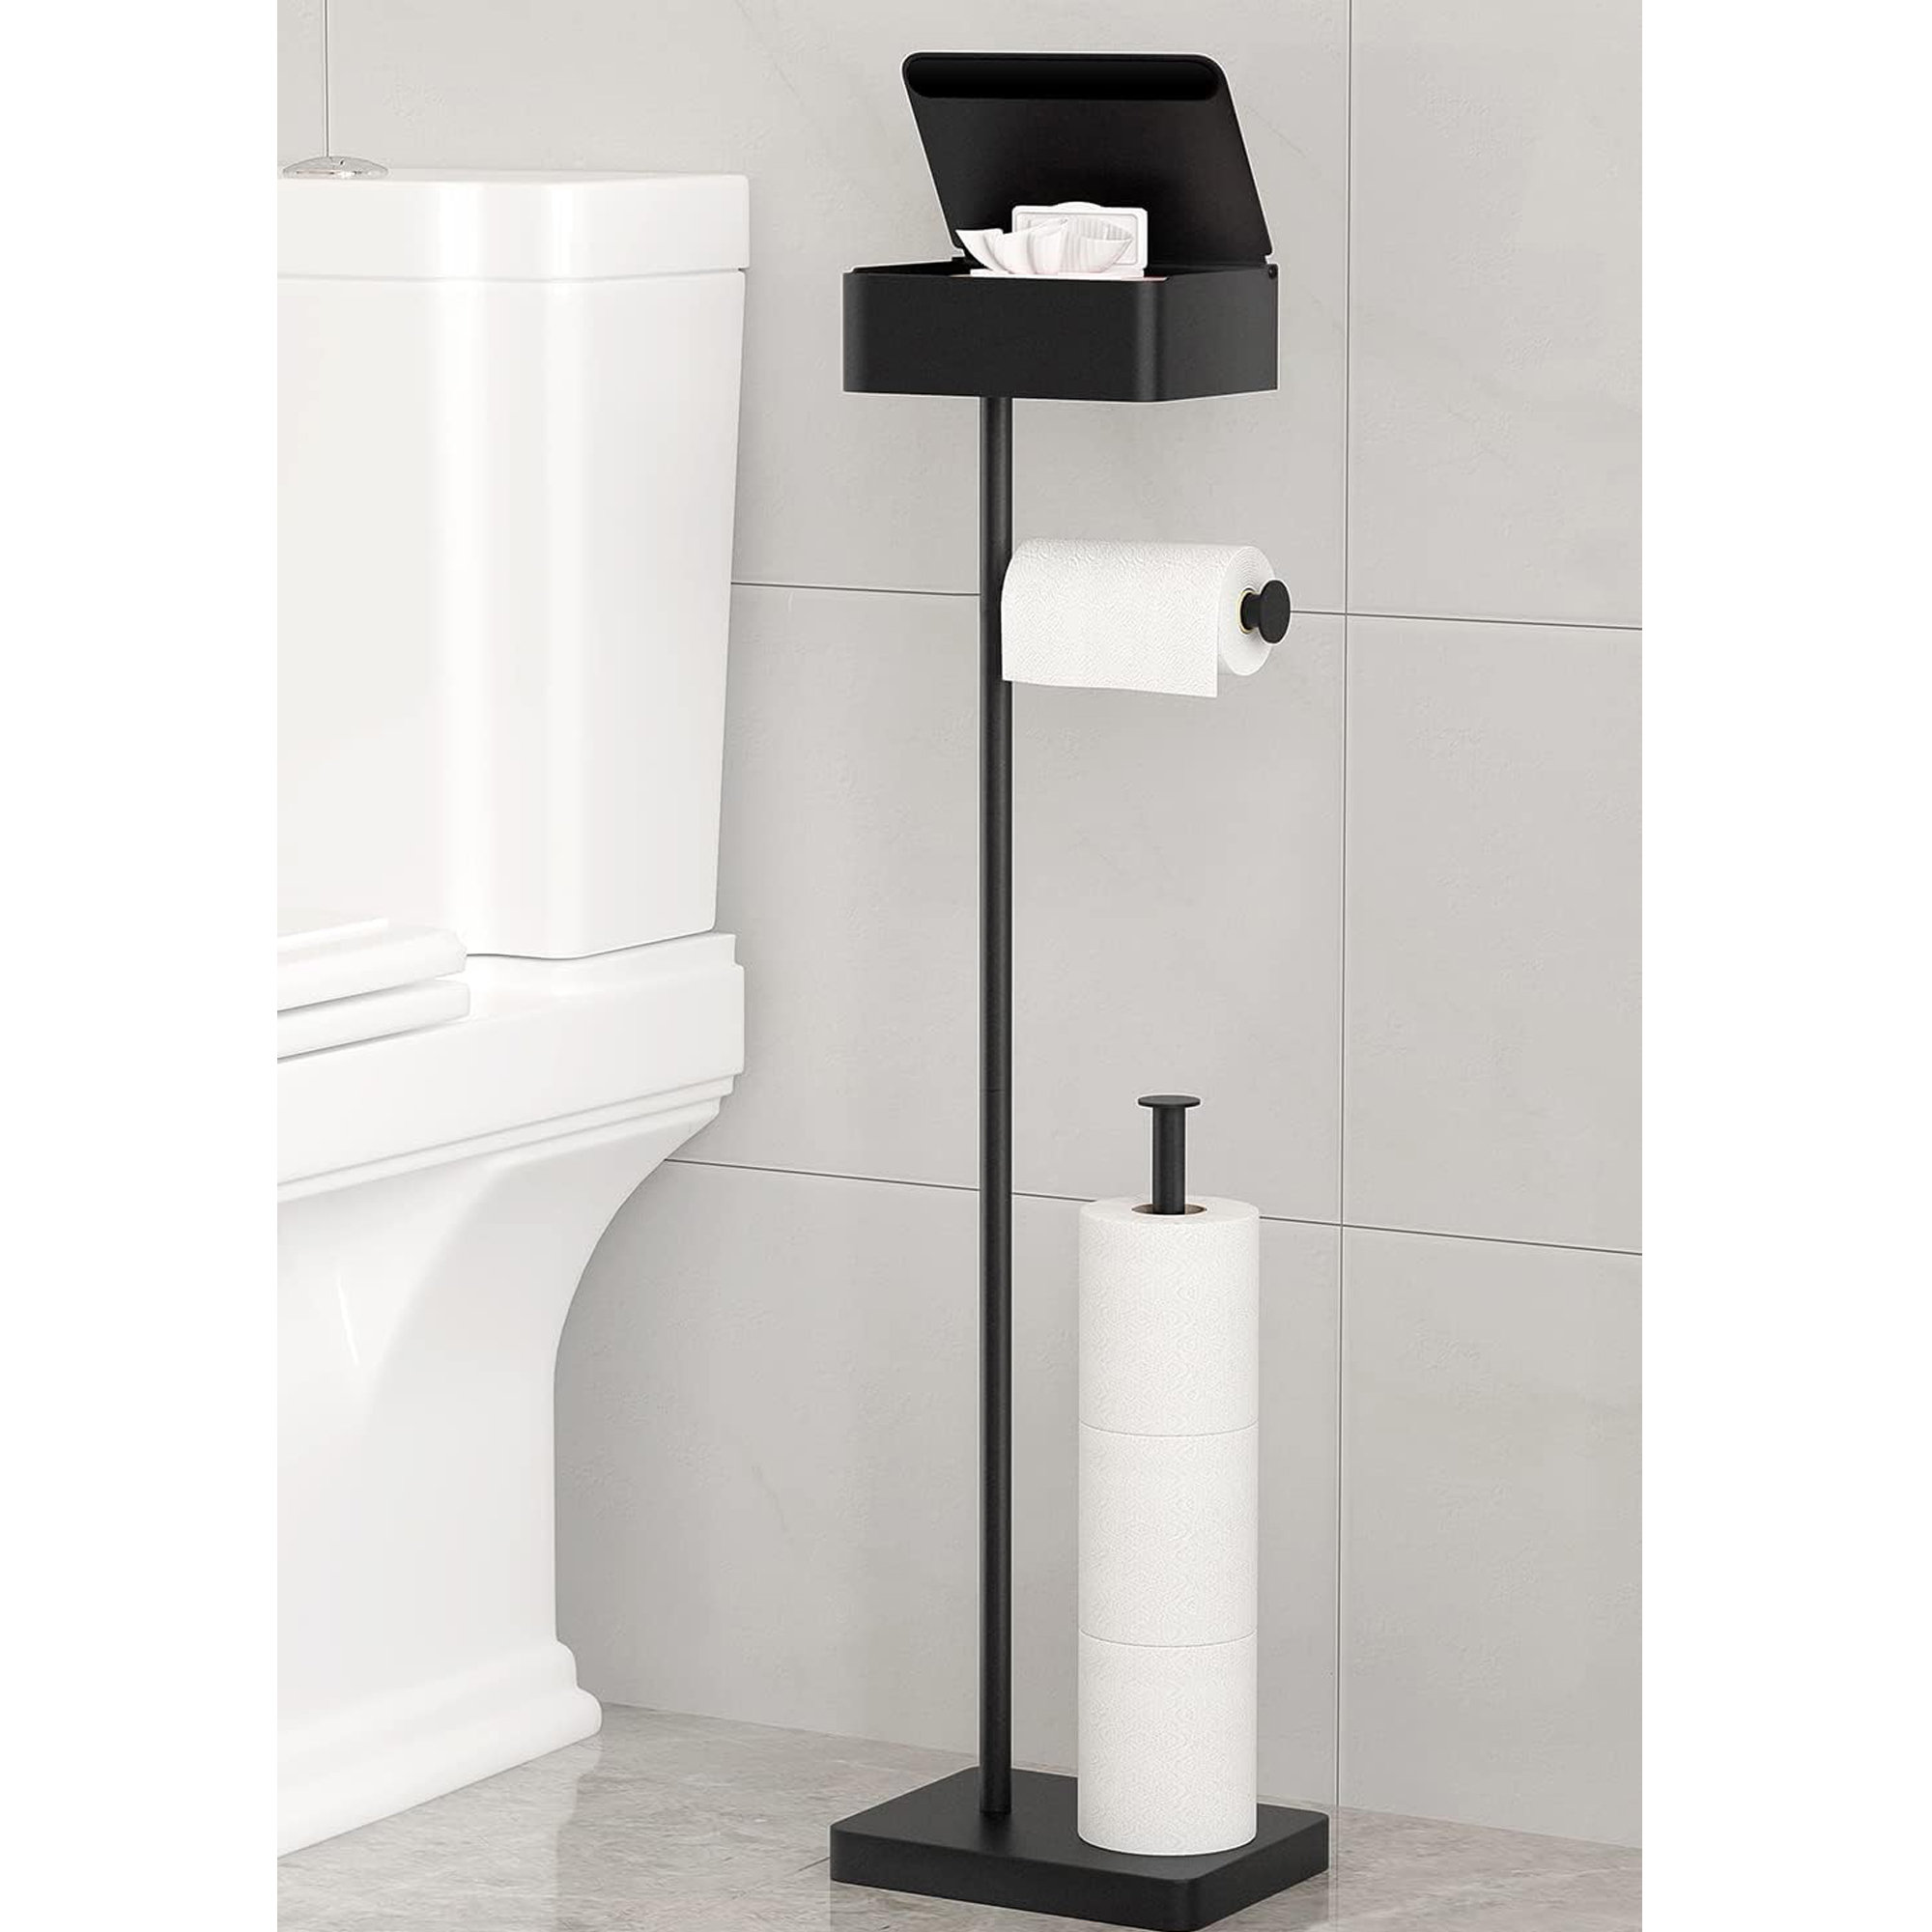 QIANXI Freestanding Toilet Paper Holder